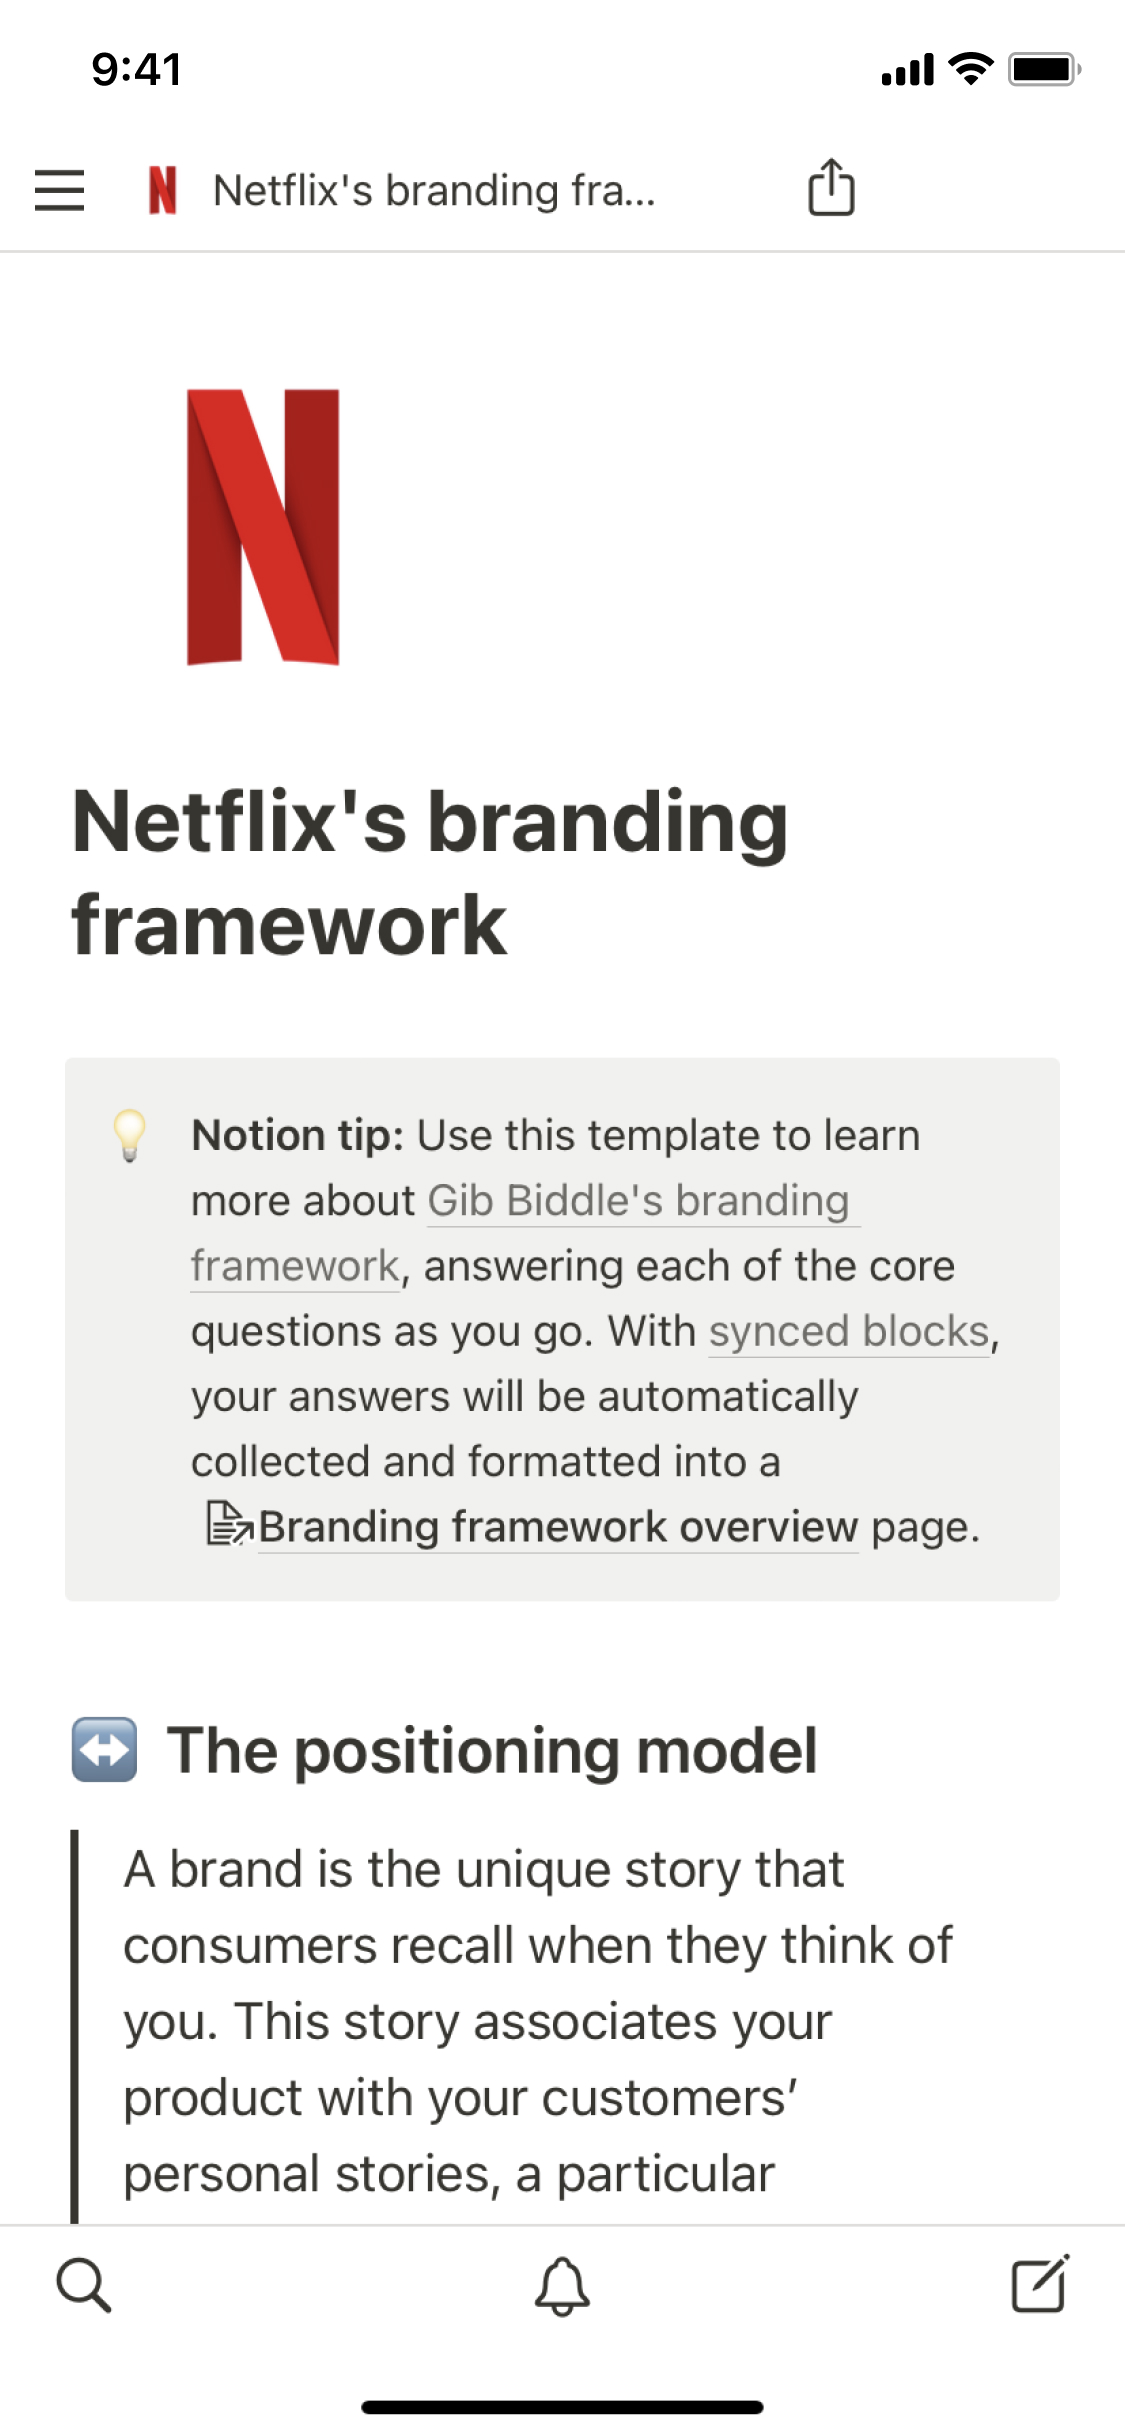 The mobile image for the Netflix's branding framework template